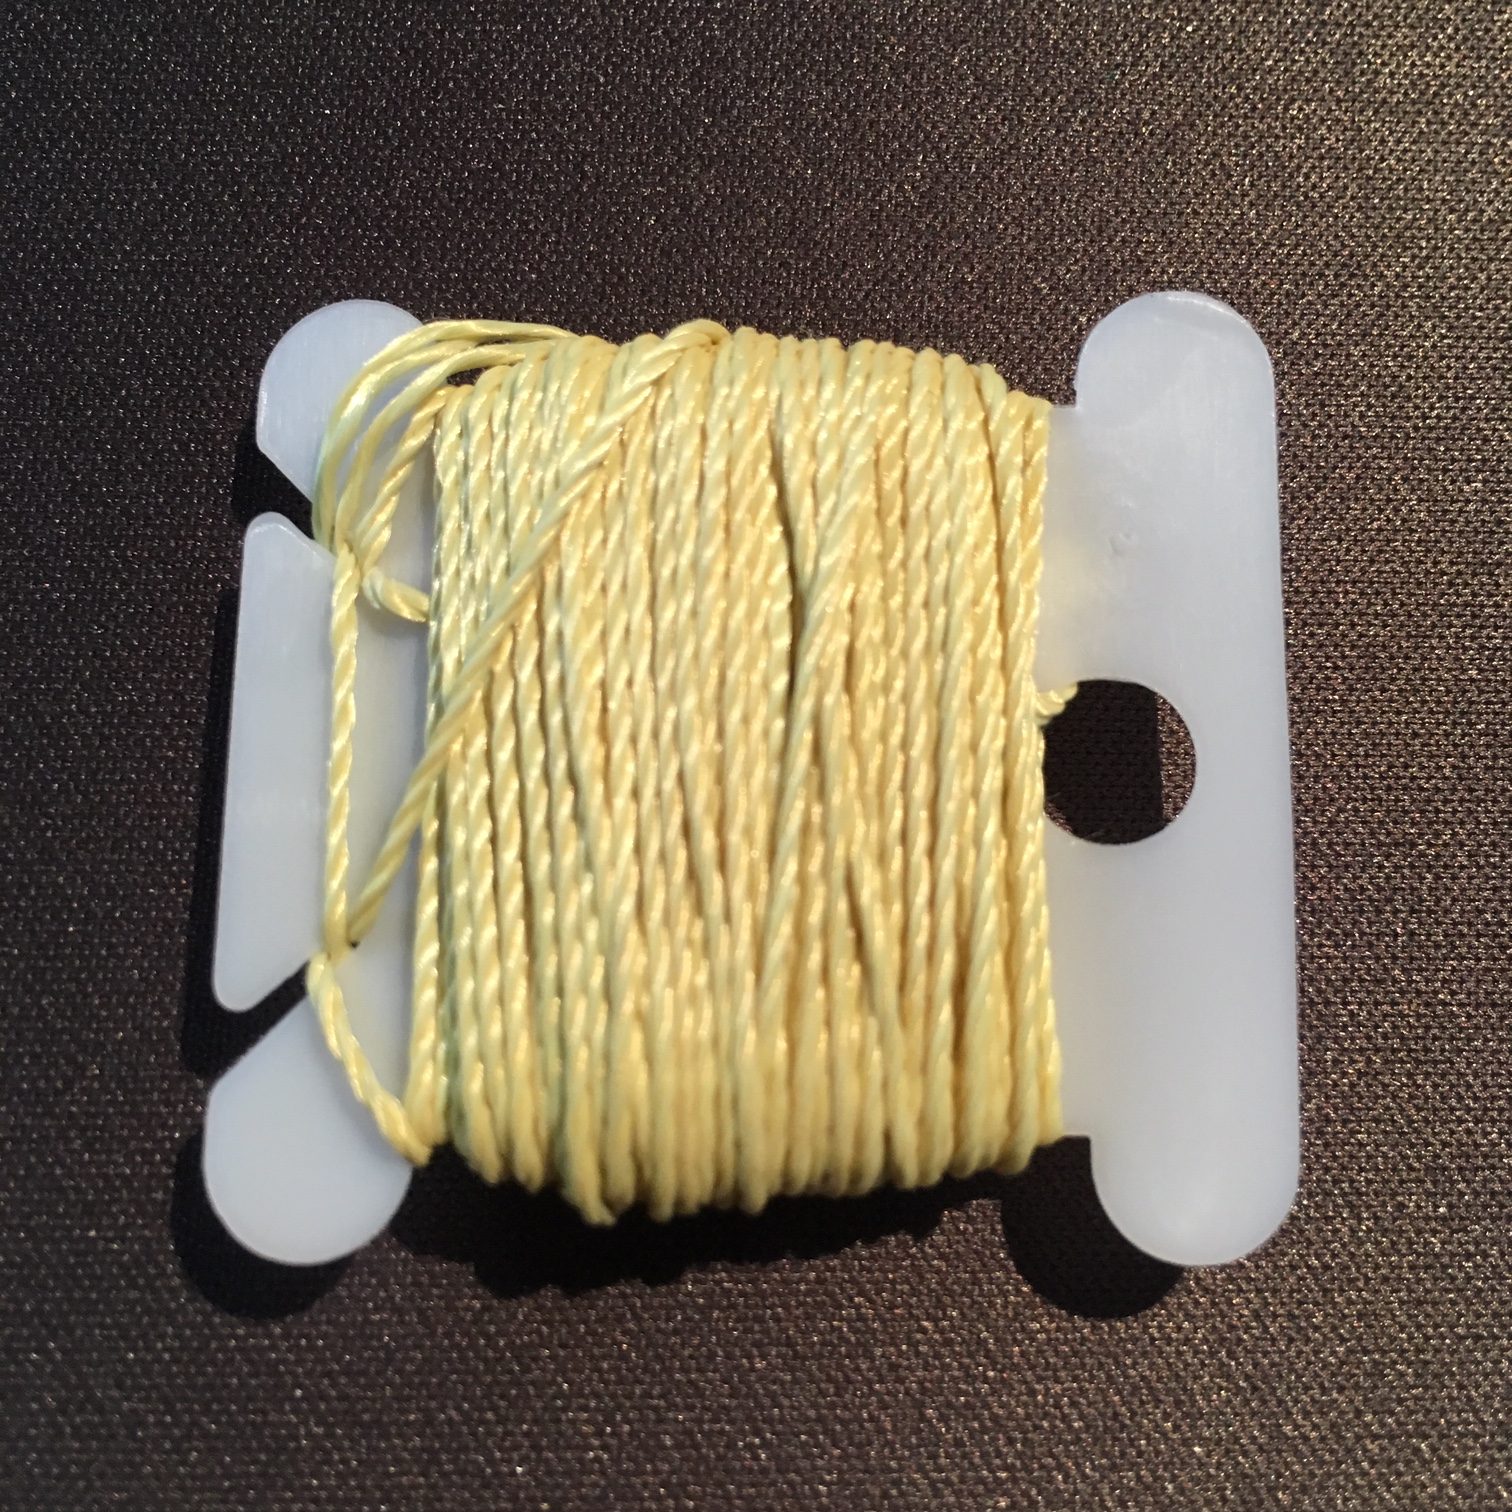 Kevlar cord - 20', 100lb test